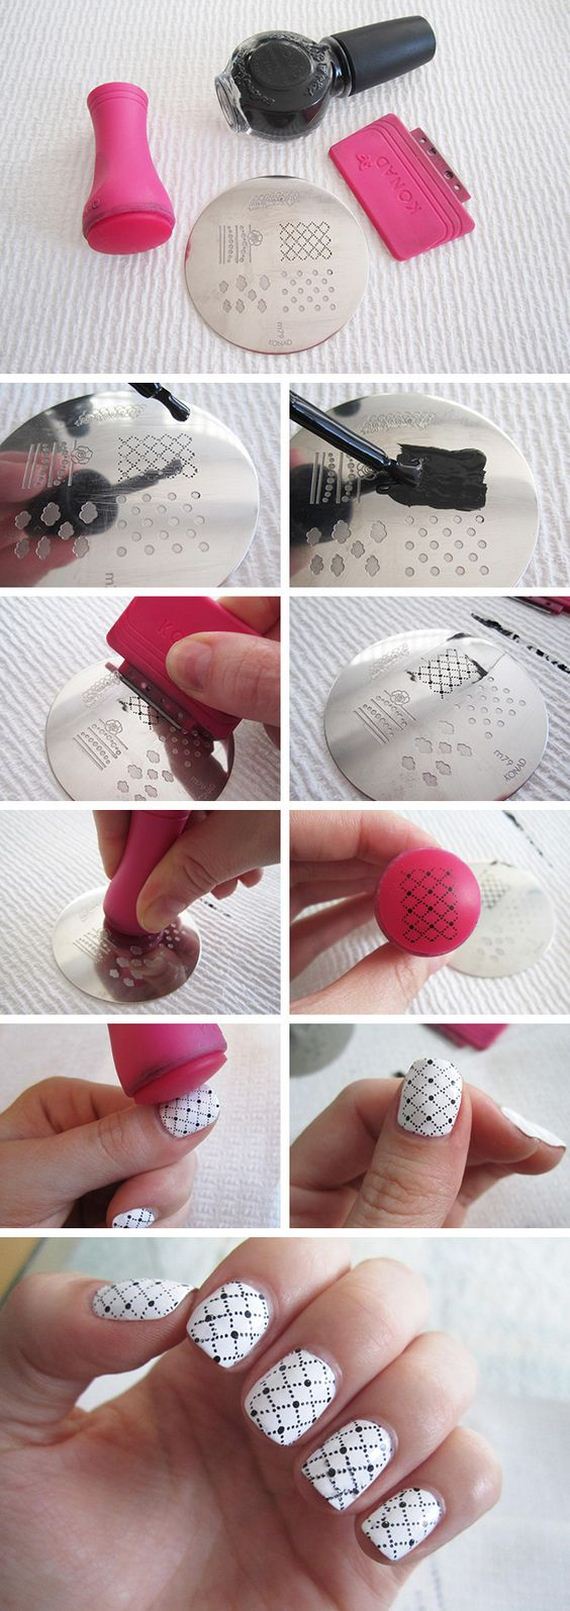 12-make-stamping-nails